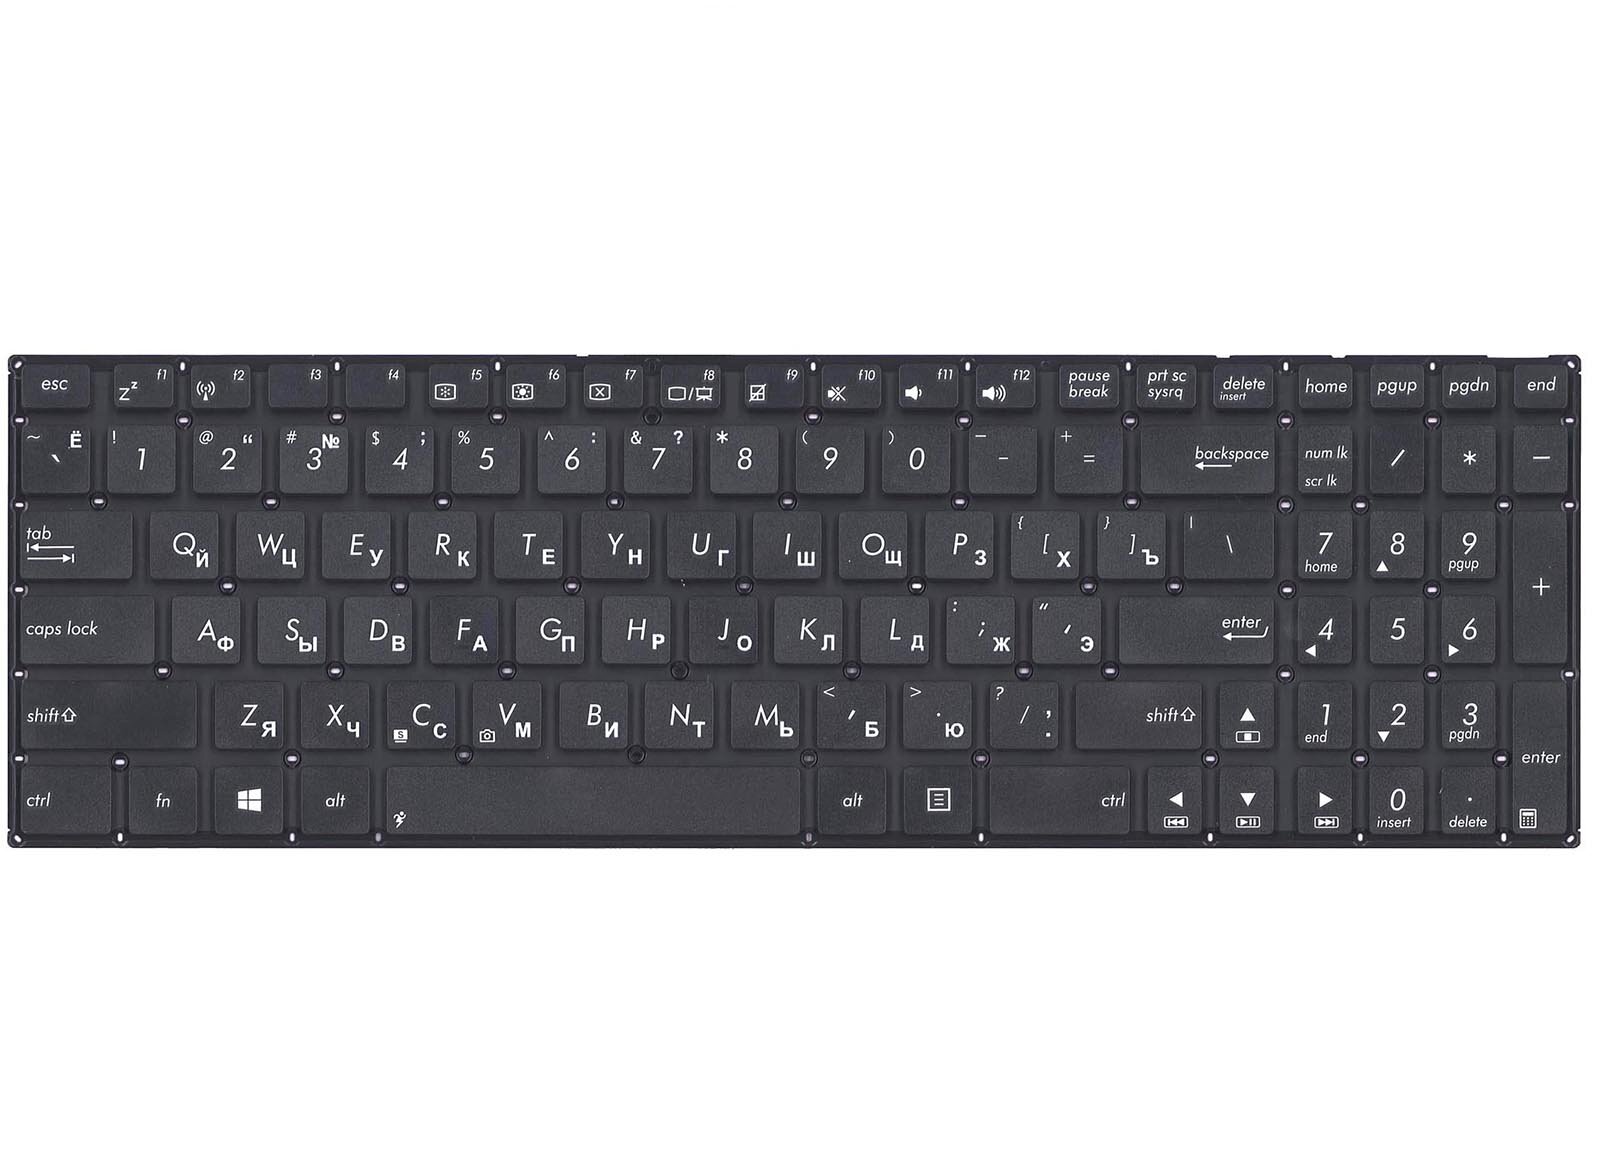 Клавиатура для ноутбука Asus X551M